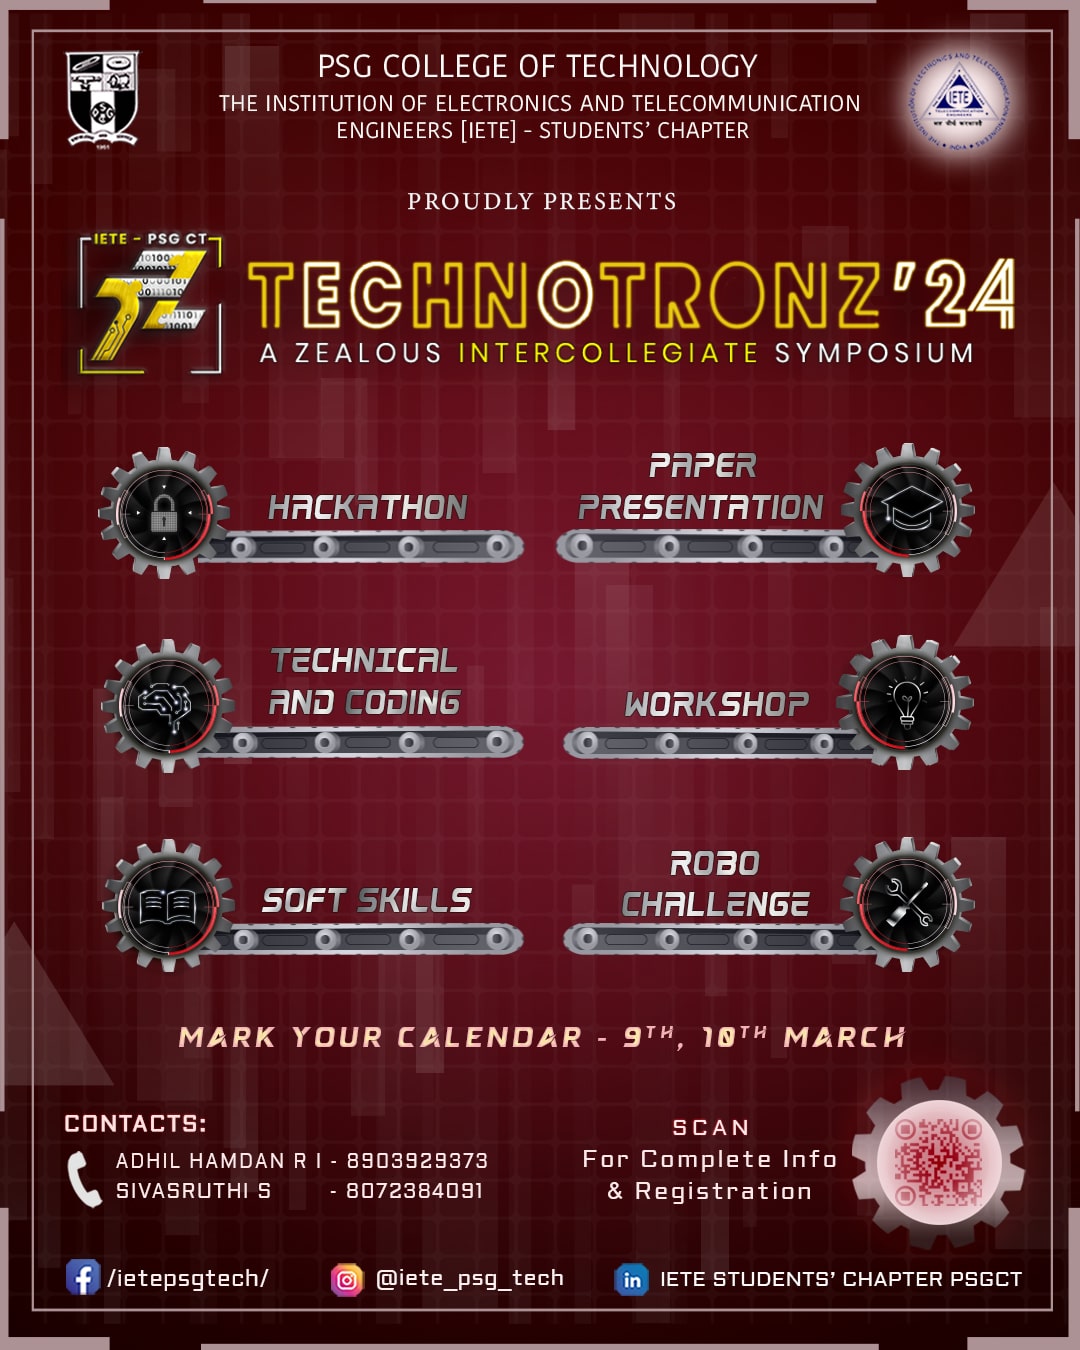 Technotronz'24